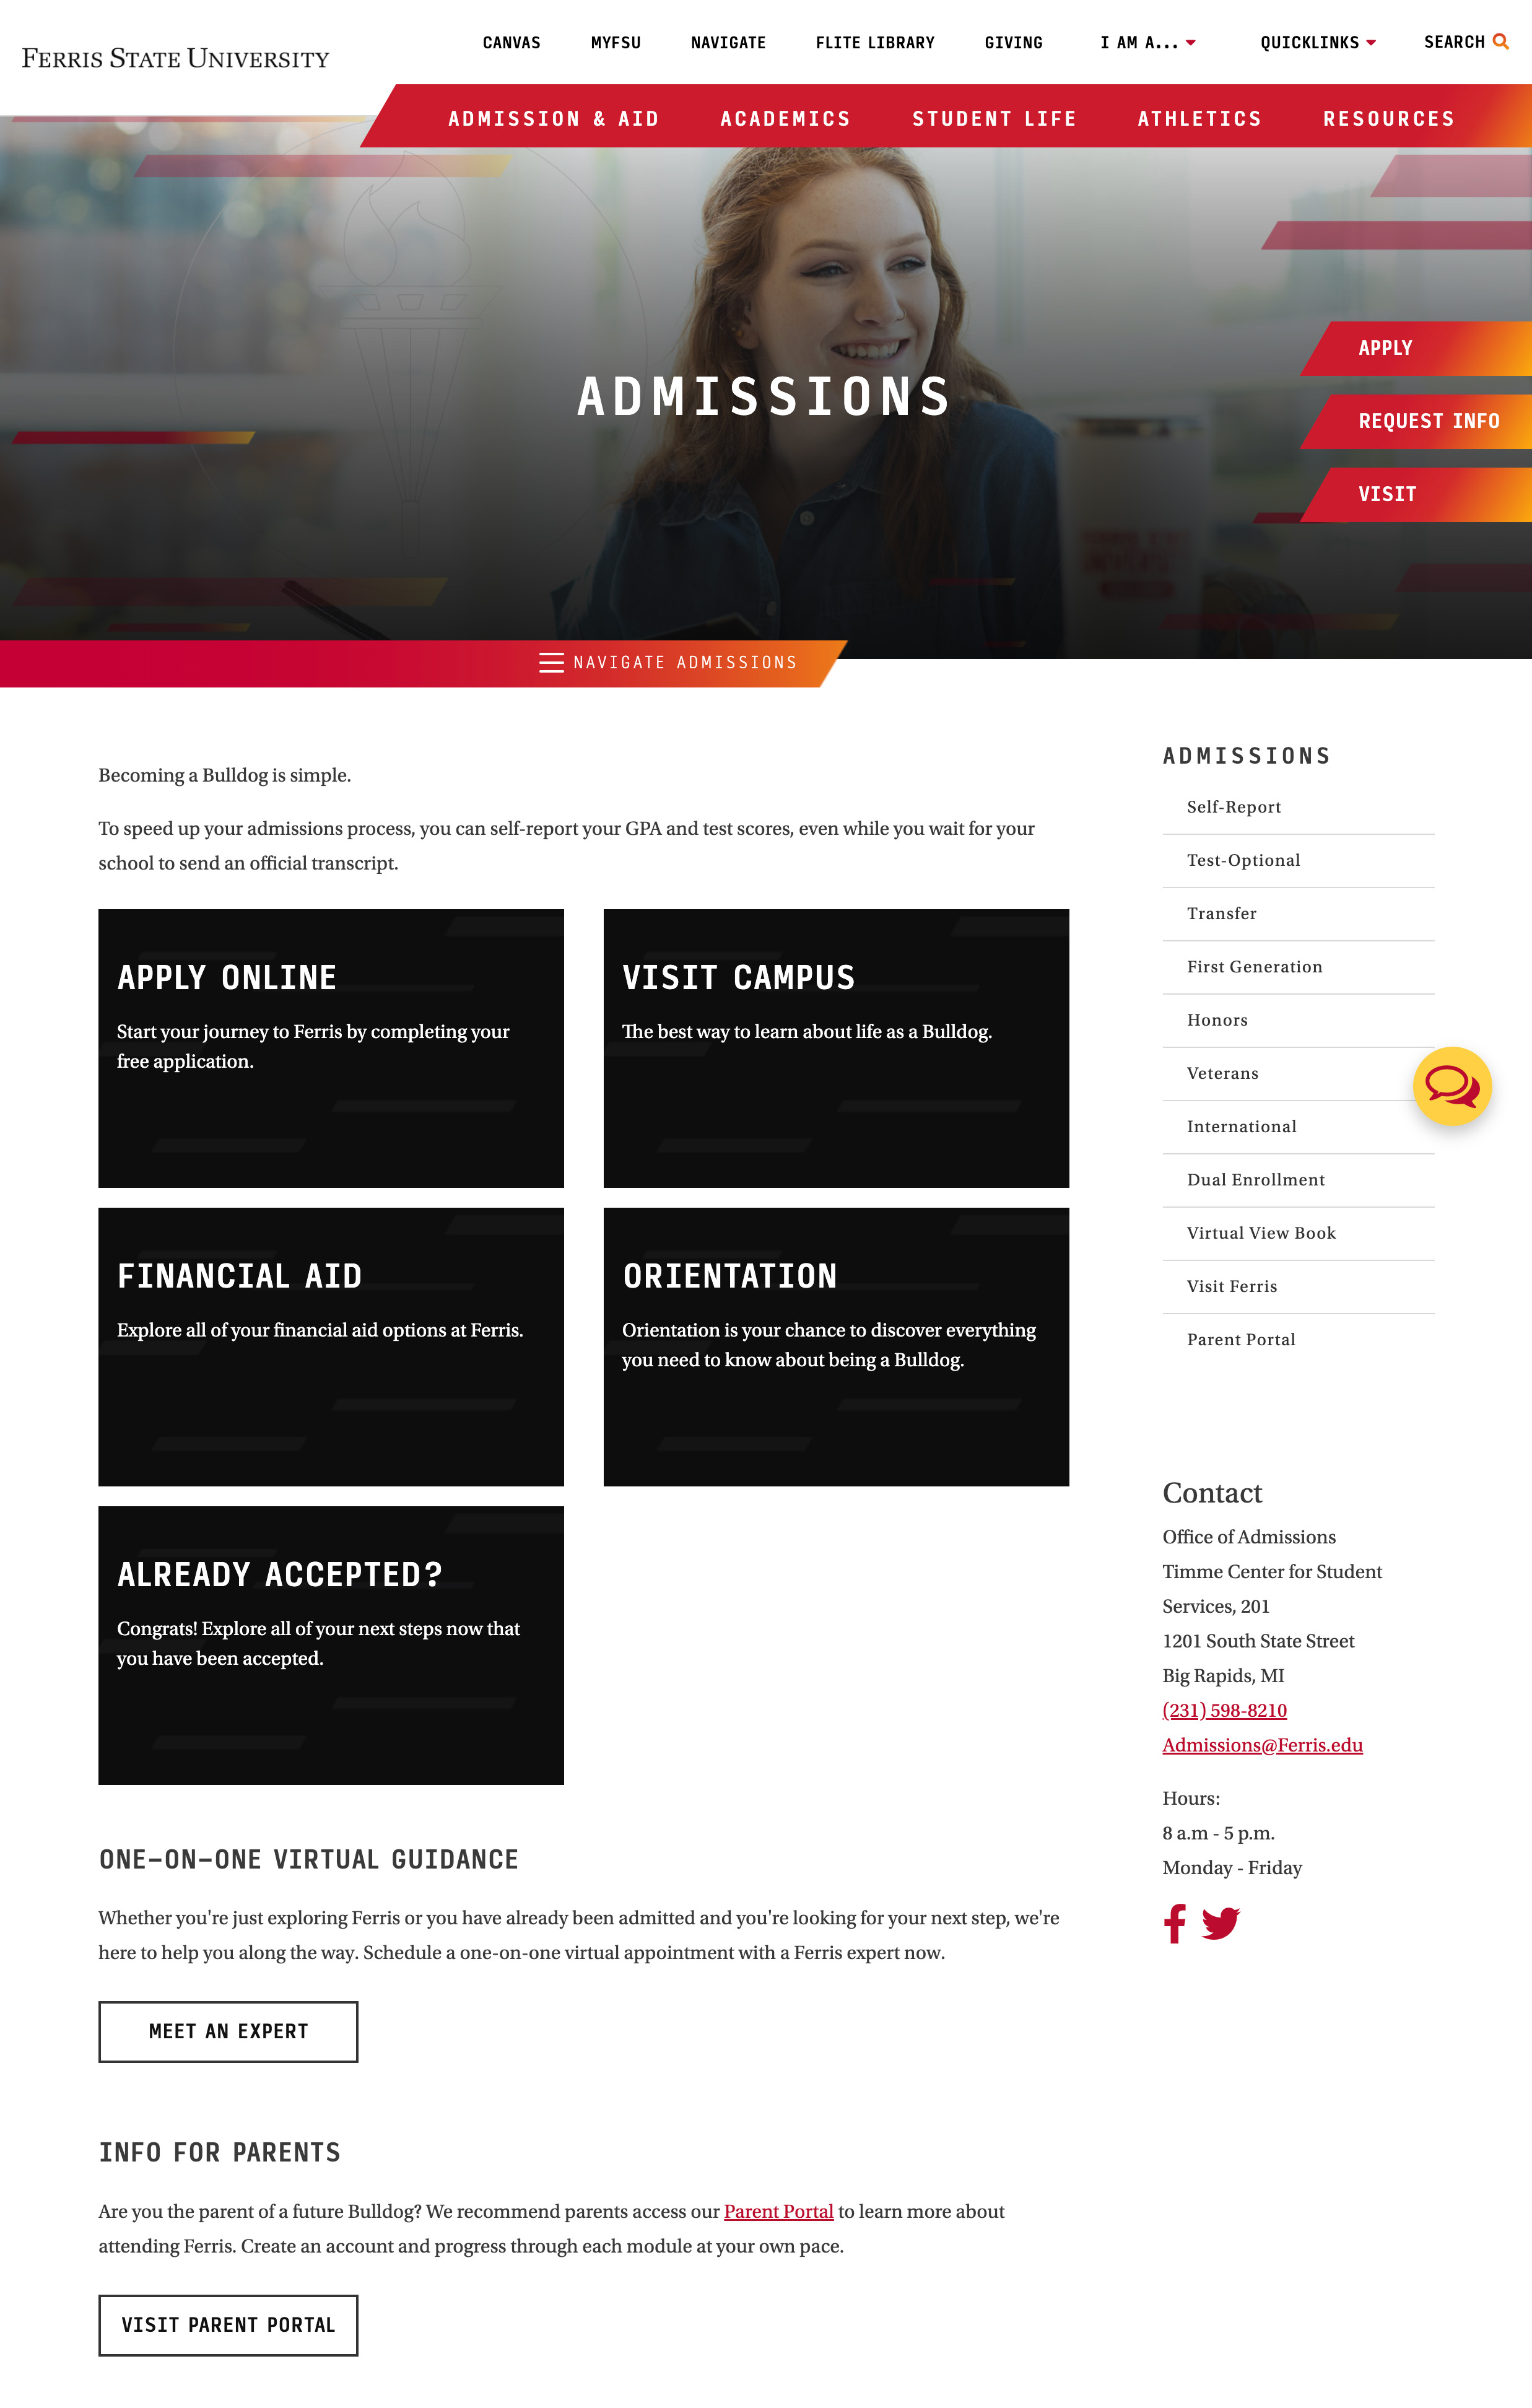 ferris state university website